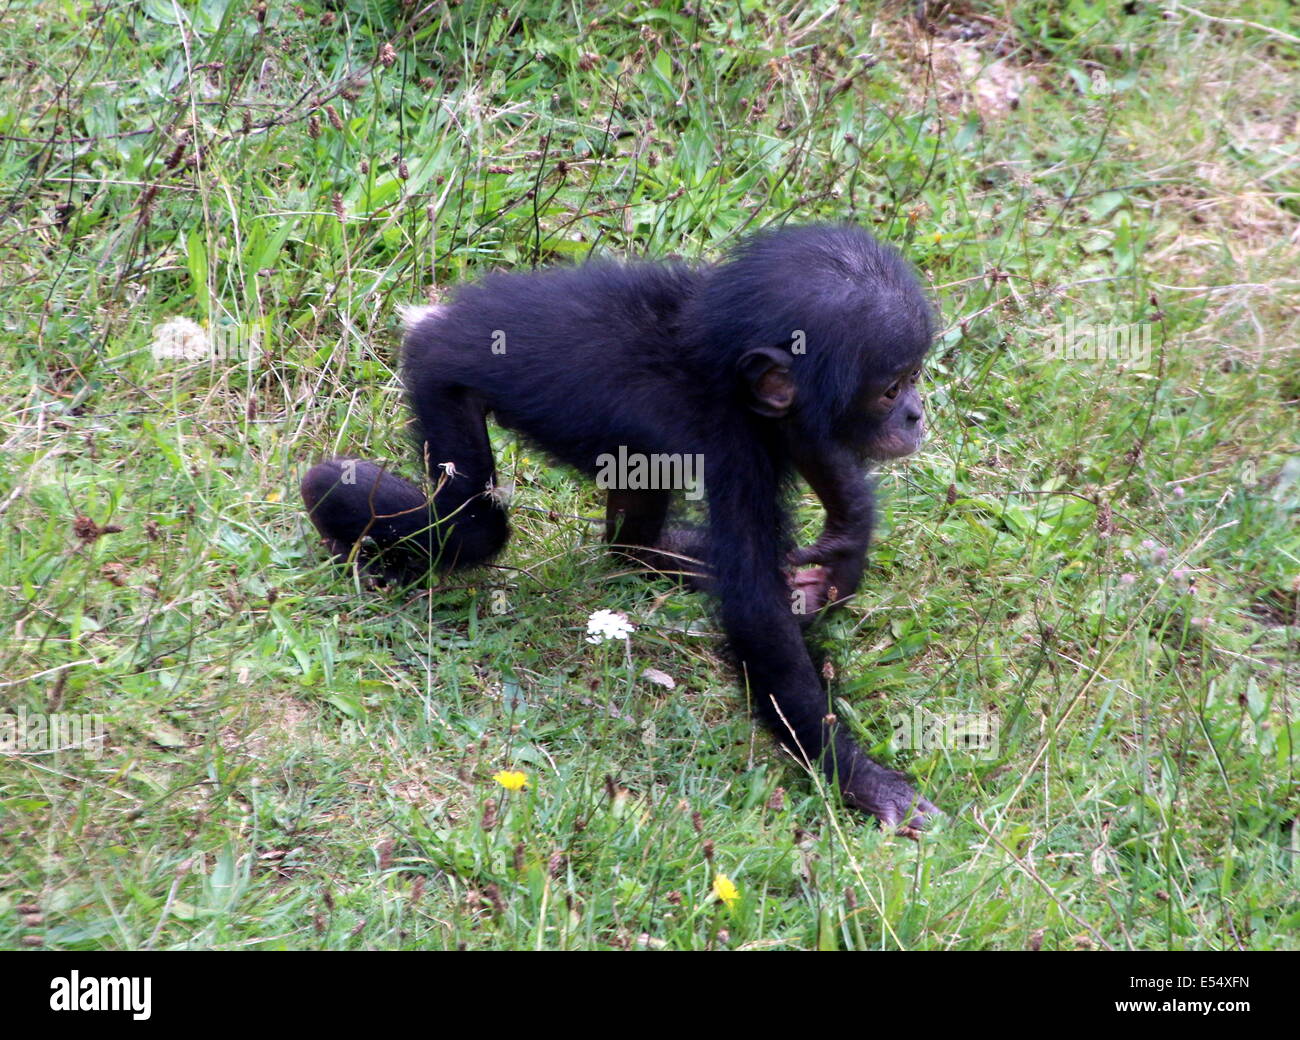 Close-up de un bebé joven (anteriormente) el bonobo o chimpancé pigmeo africano (Pan paniscus). Caminando en un entorno natural Foto de stock